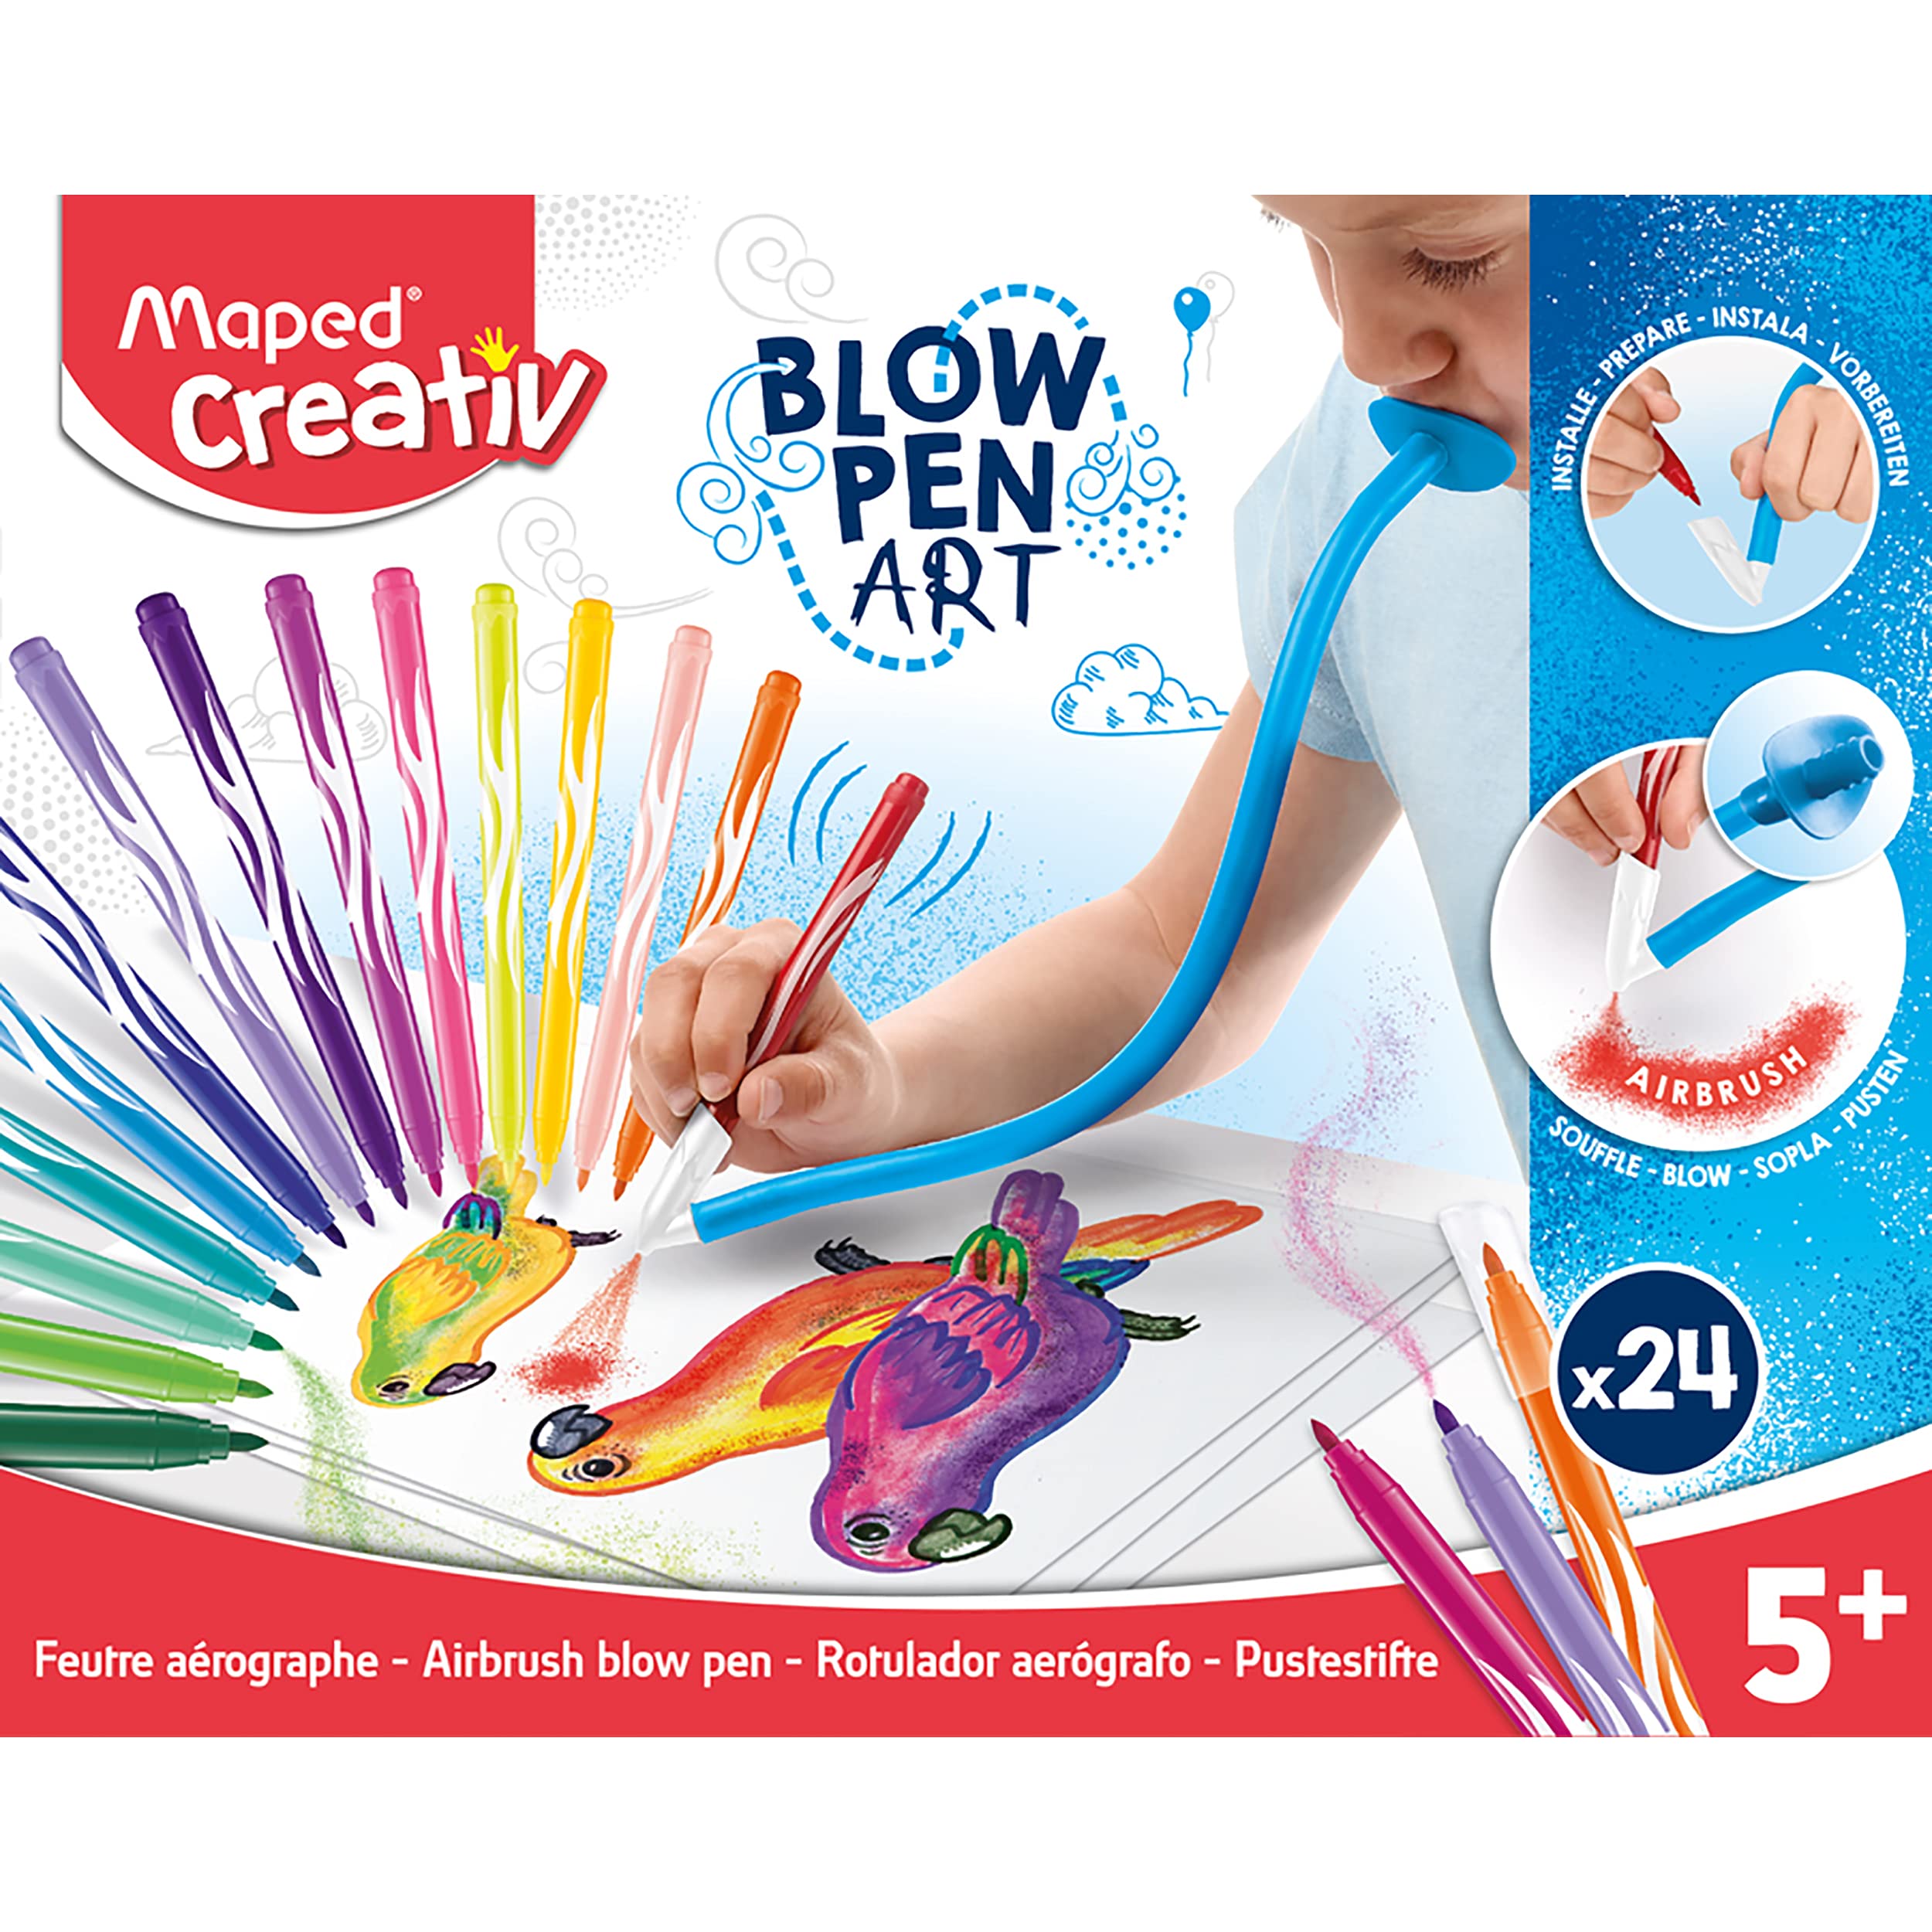 MAPED CREATIV Creative Skill Set, MAPED CREATIV, Early age, finger paints  